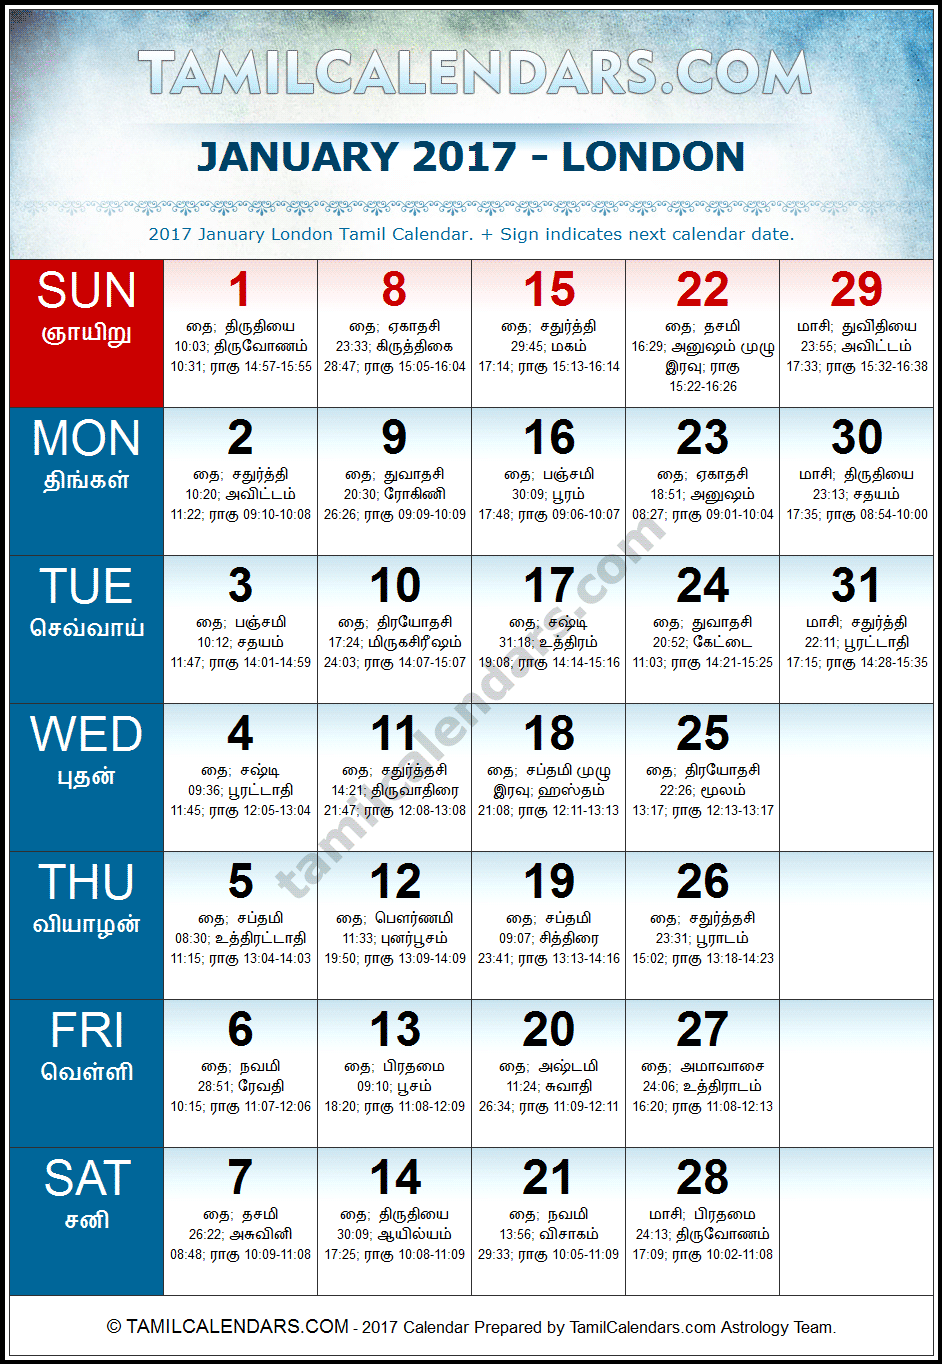 January 2017 Tamil Calendar for London, UK